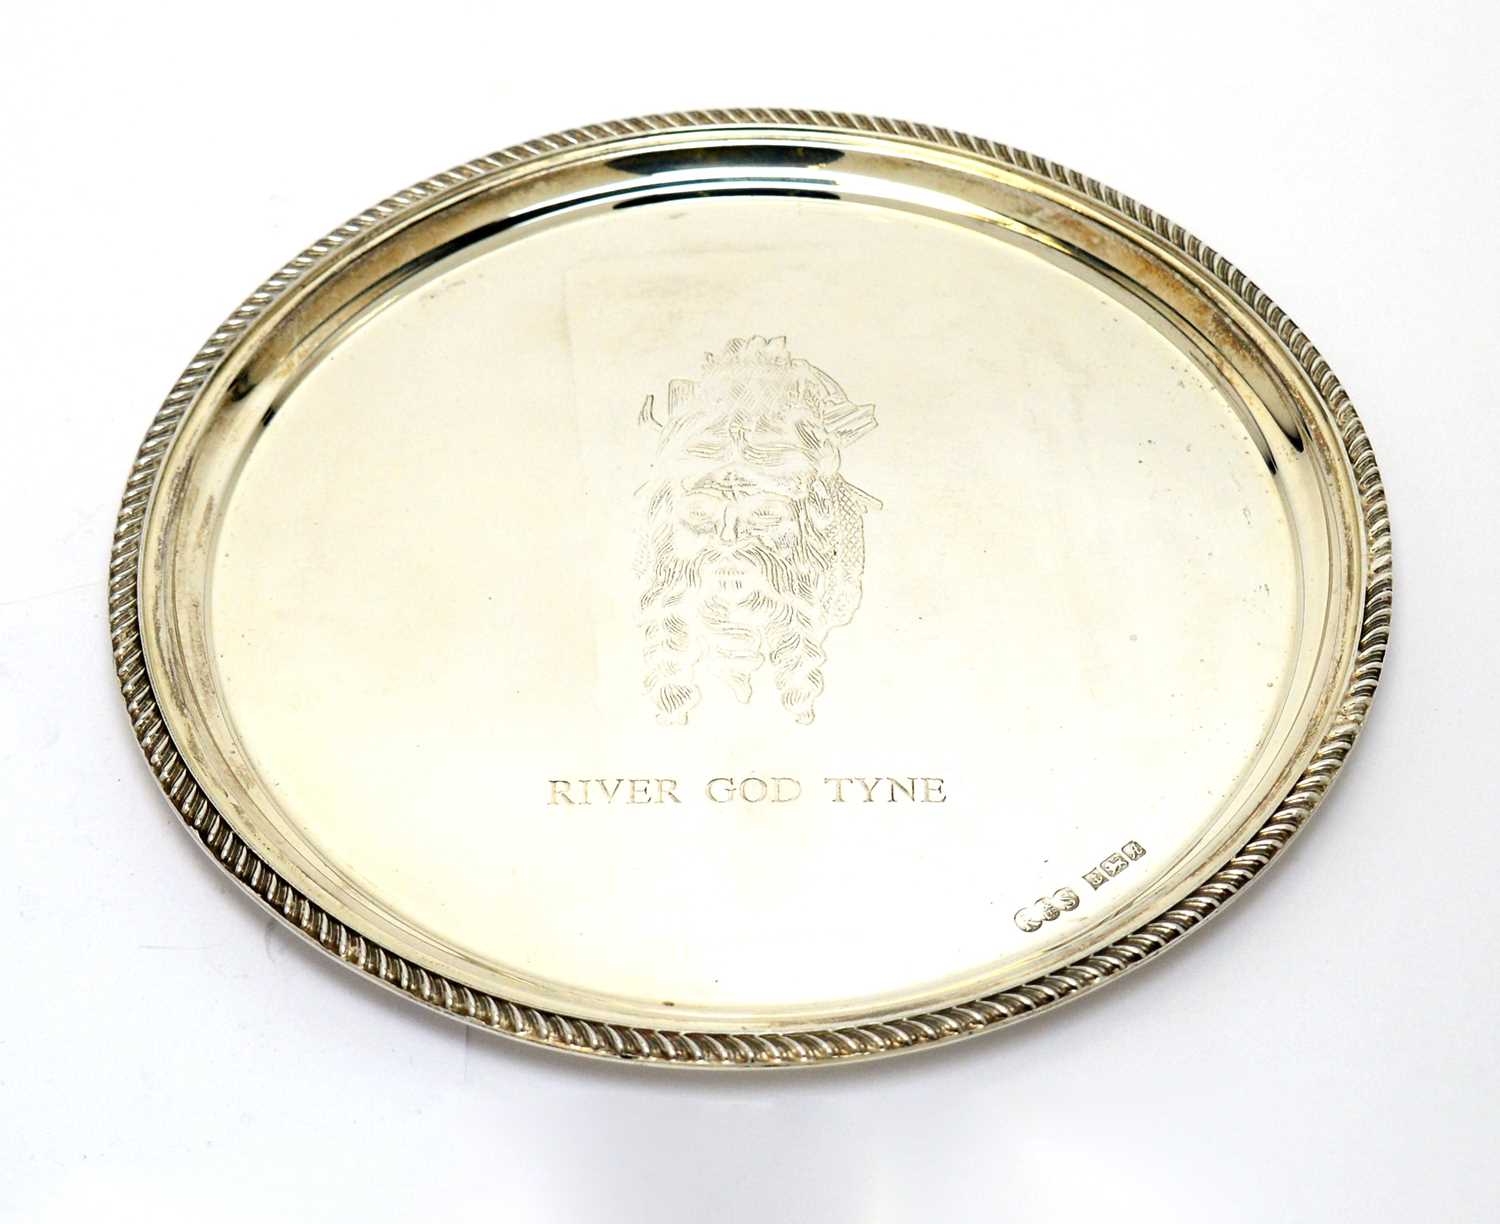 Lot 198 - Silver God of Tyne waiter, by Reid & Sons